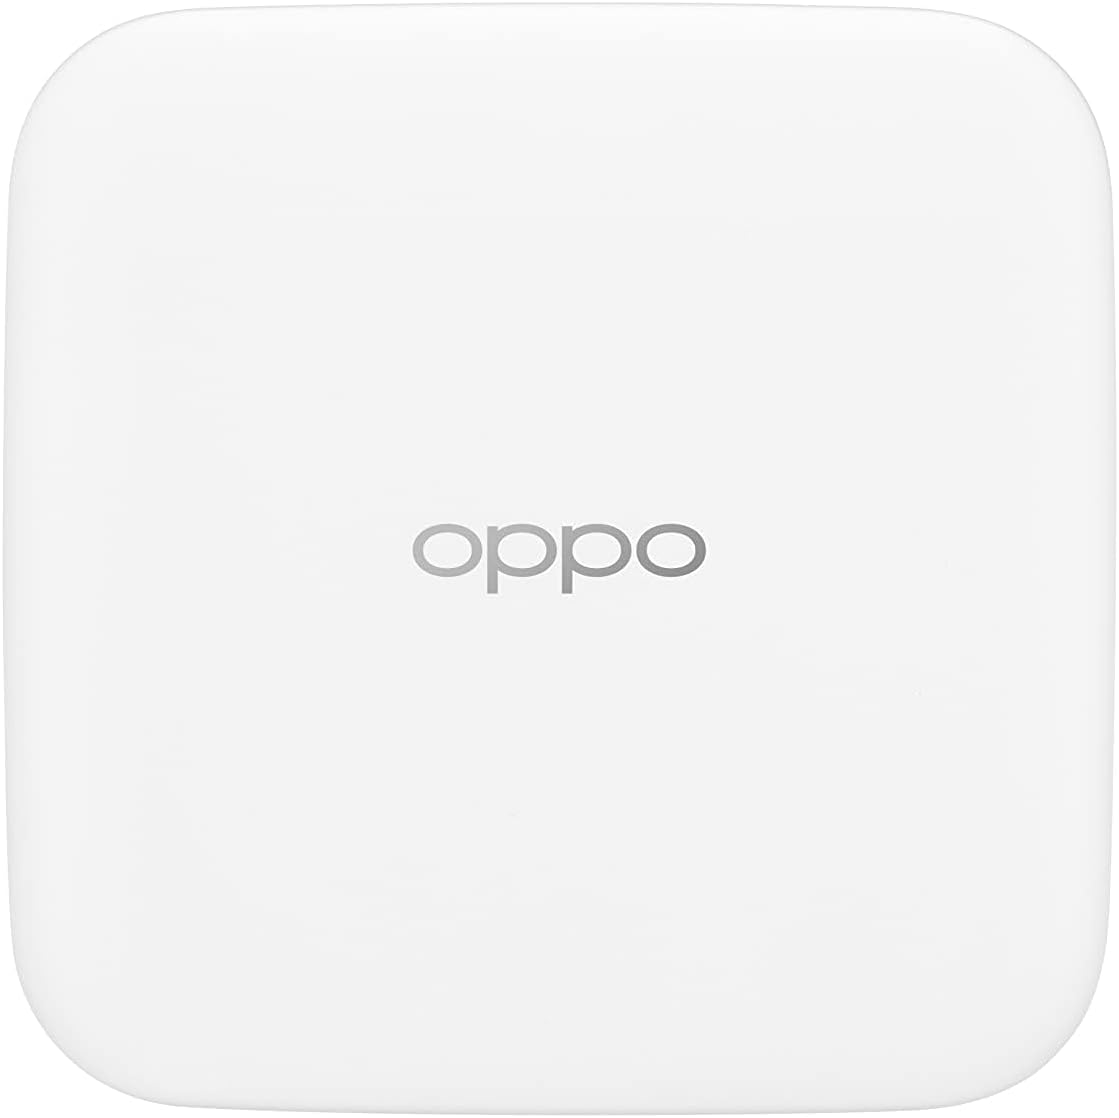 روتر اوپو مدل OPPO 5G CPE T1a Router - ارسال 10 الی 15 روز کاری